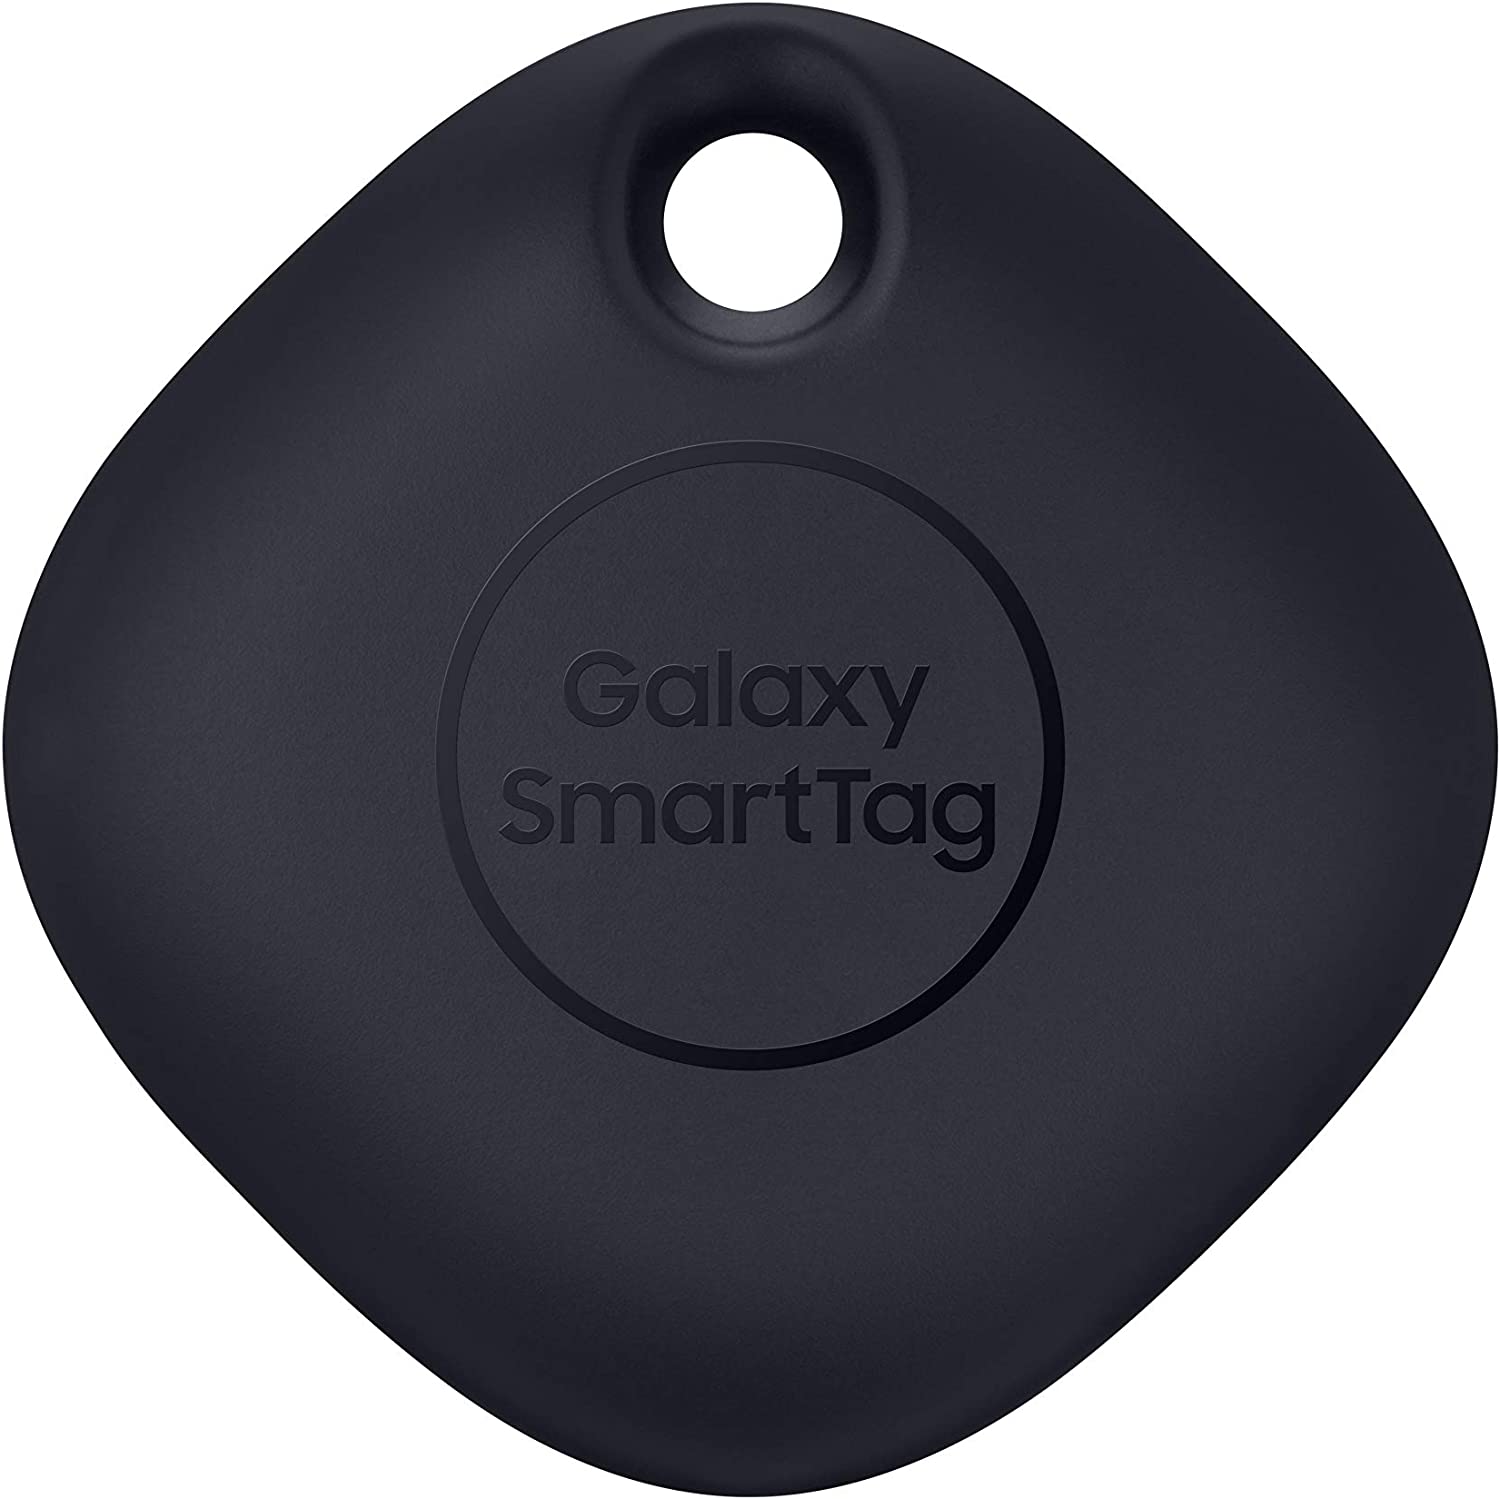 SAMSUNG Galaxy SmartTag IoT Devices